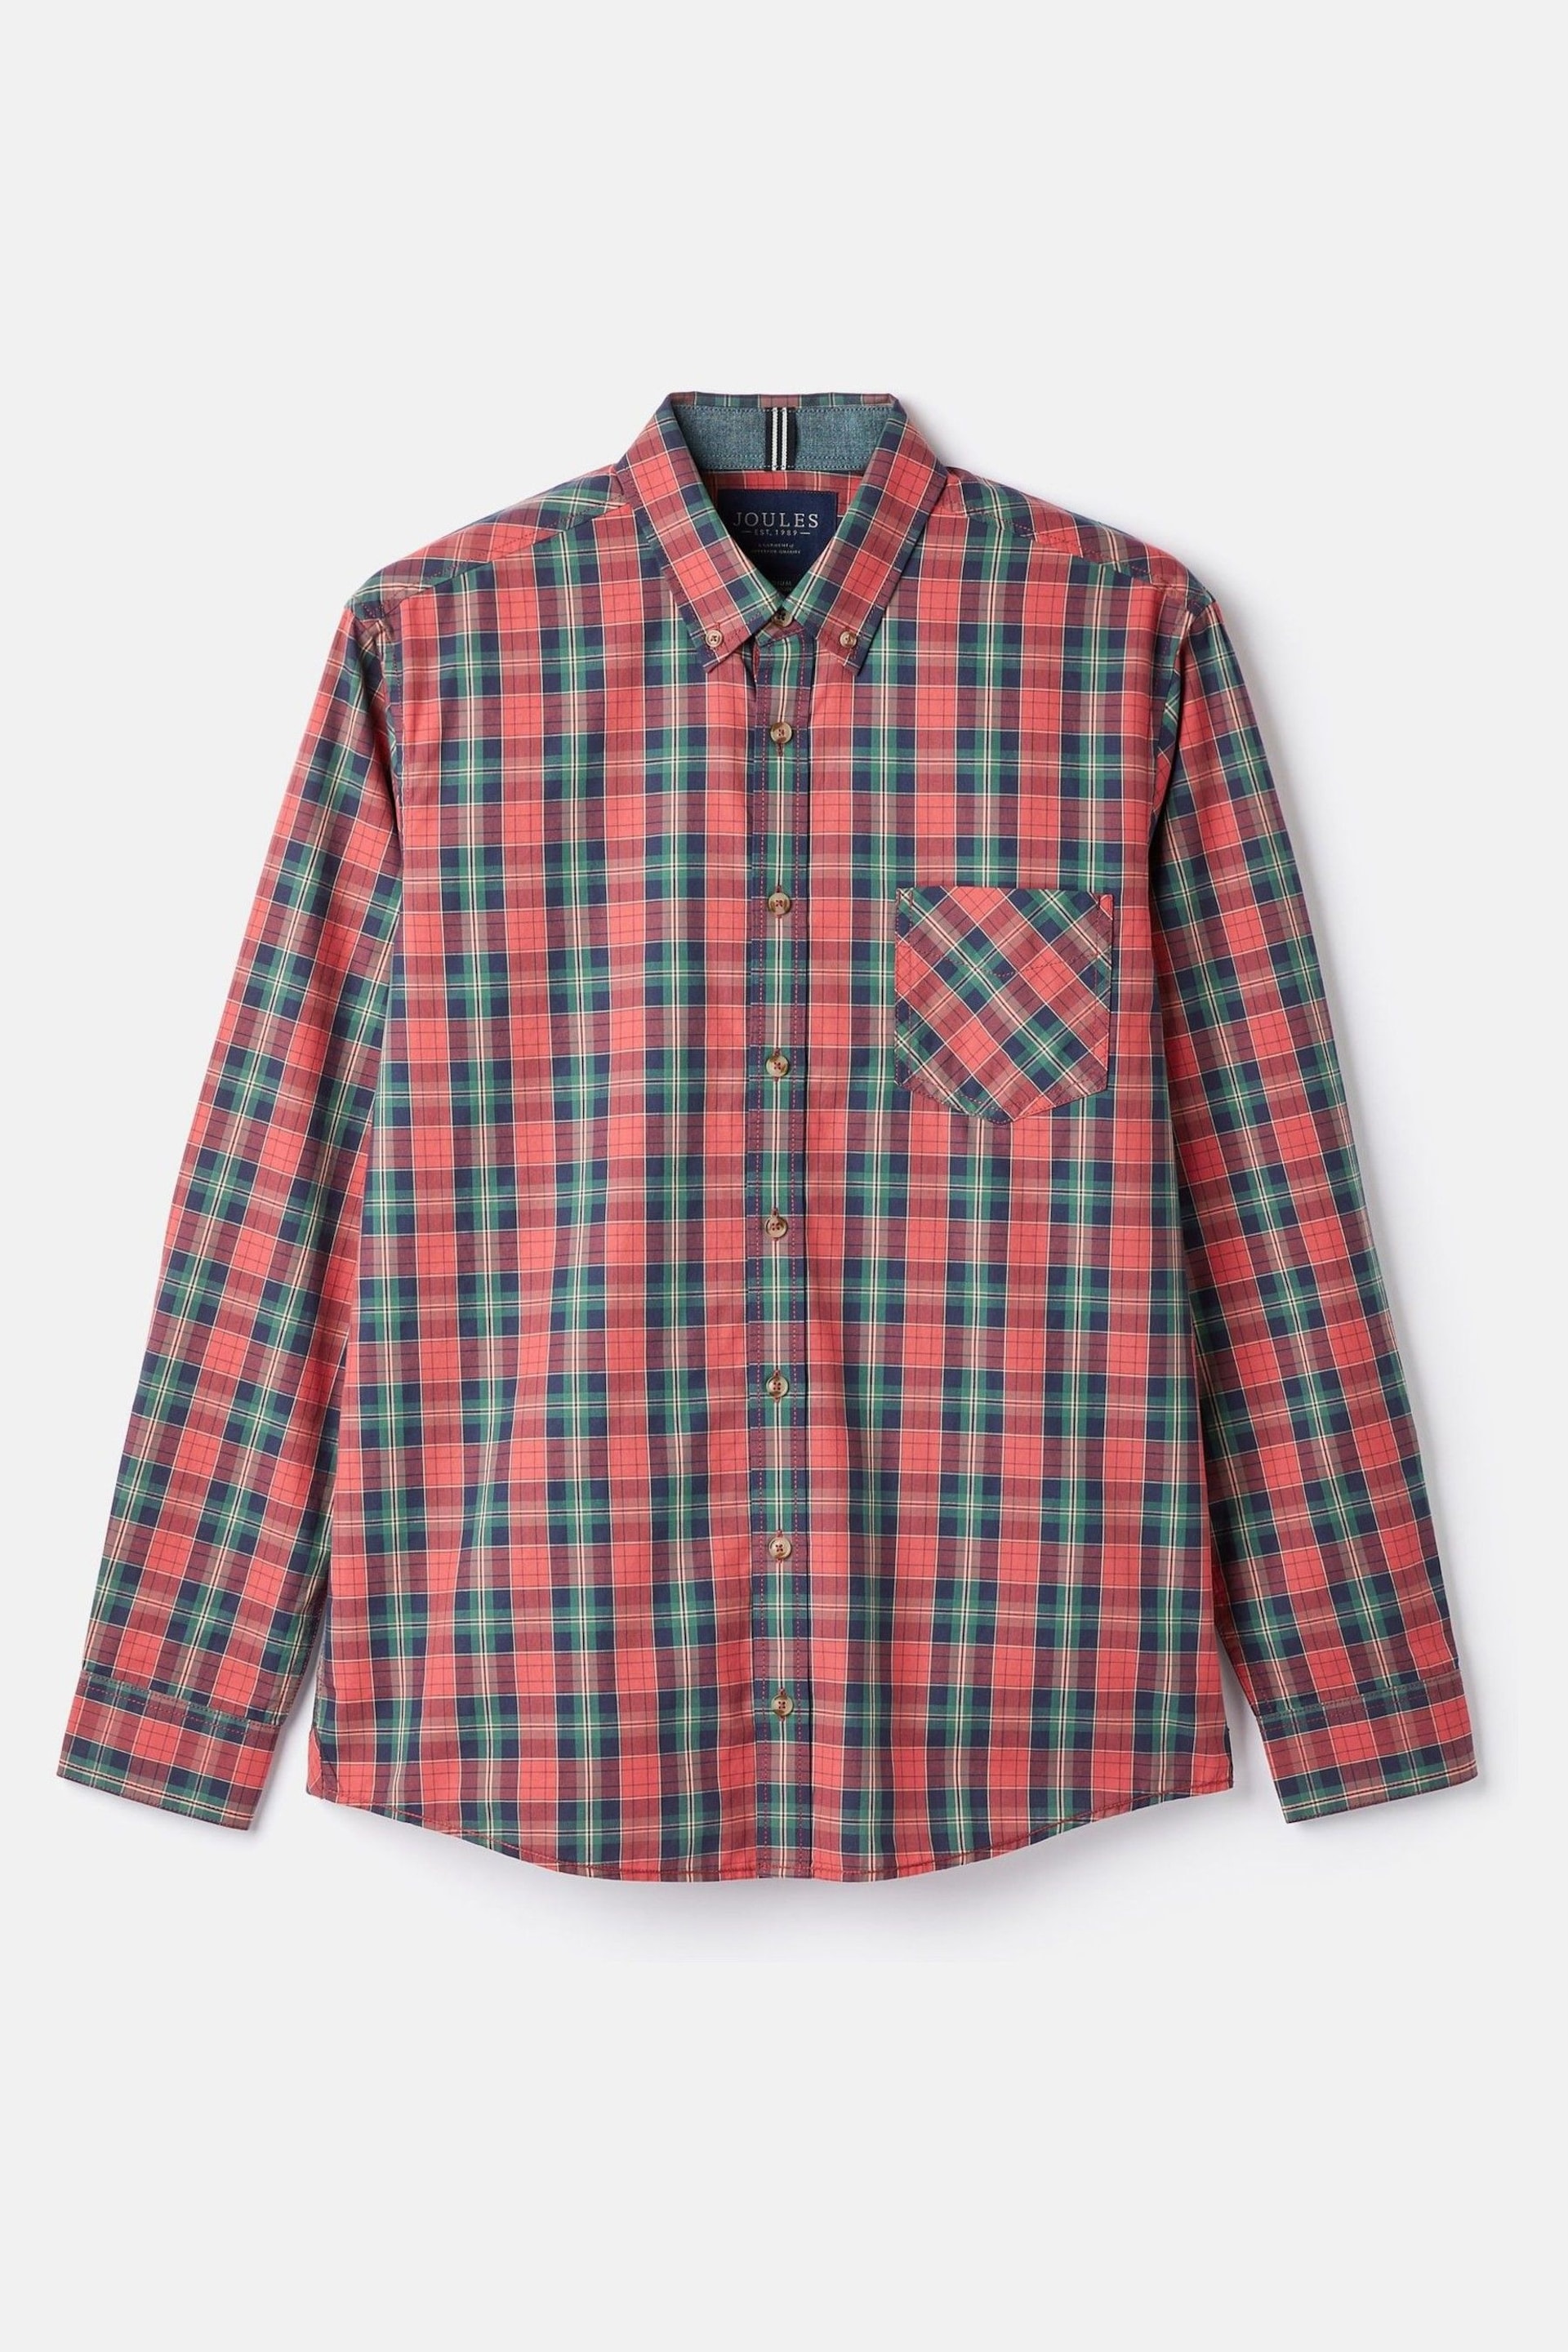 Joules Goodridge Red Check Long Sleeve Cotton Poplin Shirt - Image 7 of 7